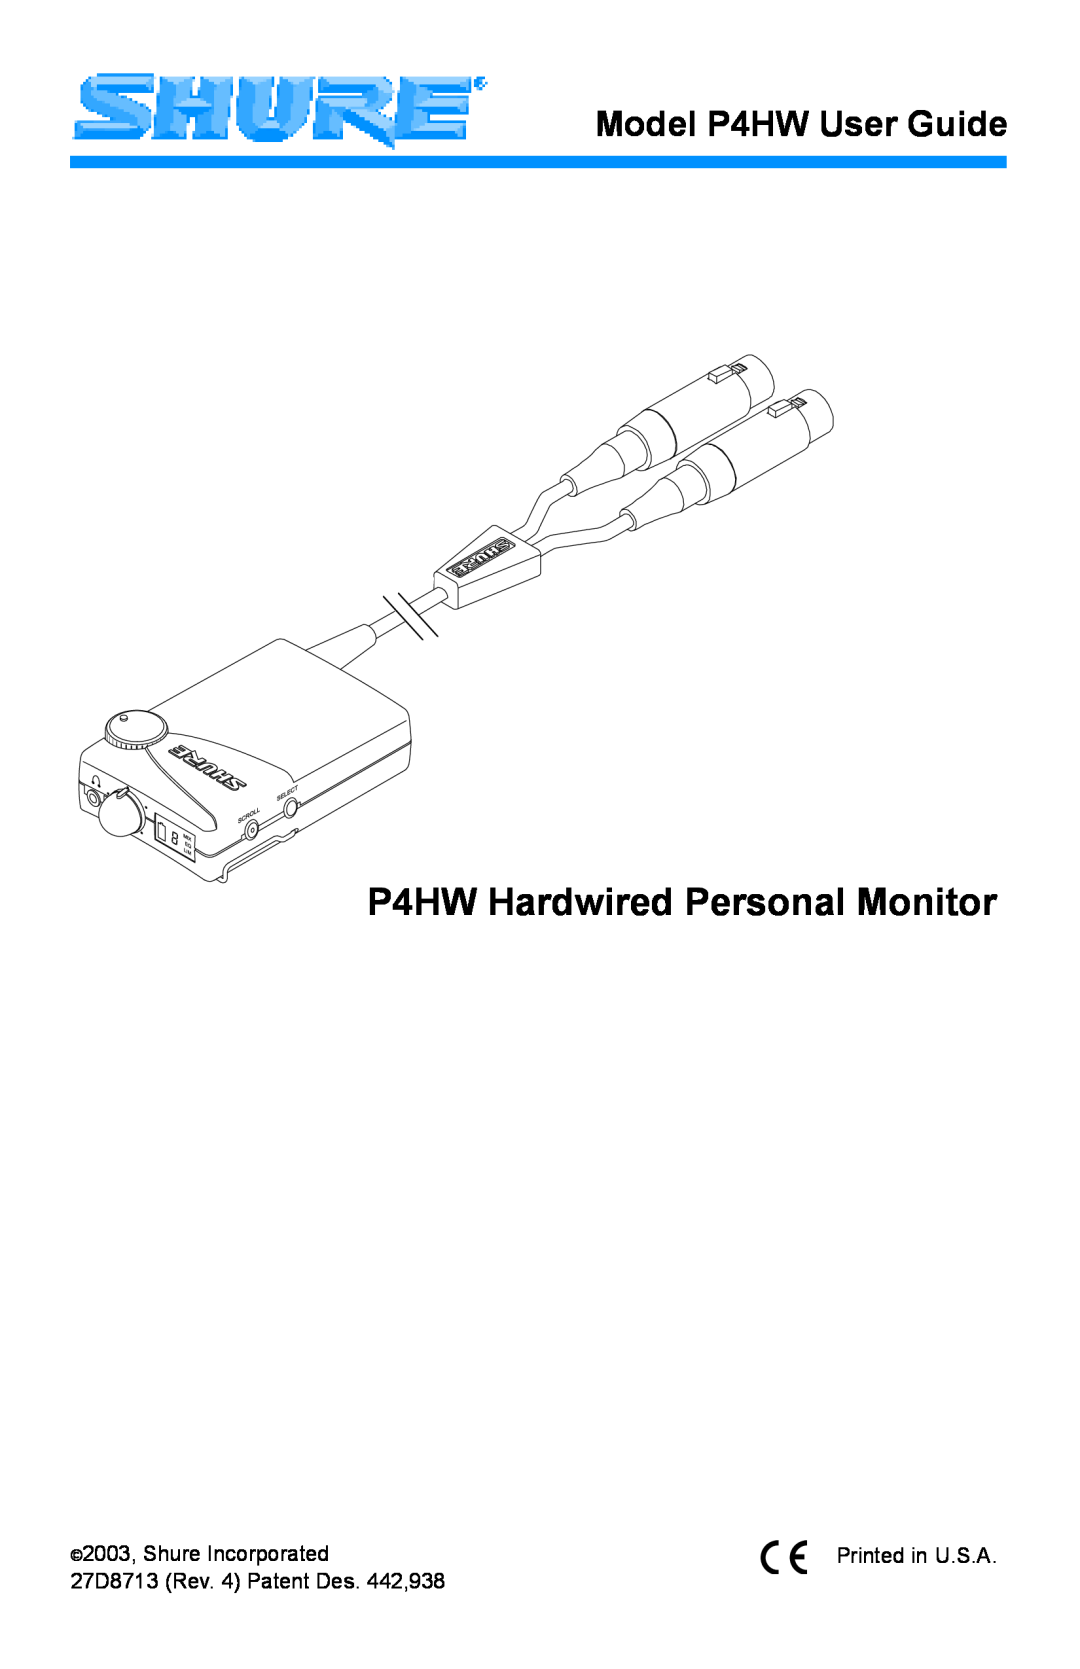 Shure manual P4HW Hardwired Personal Monitor, Model P4HW User Guide 